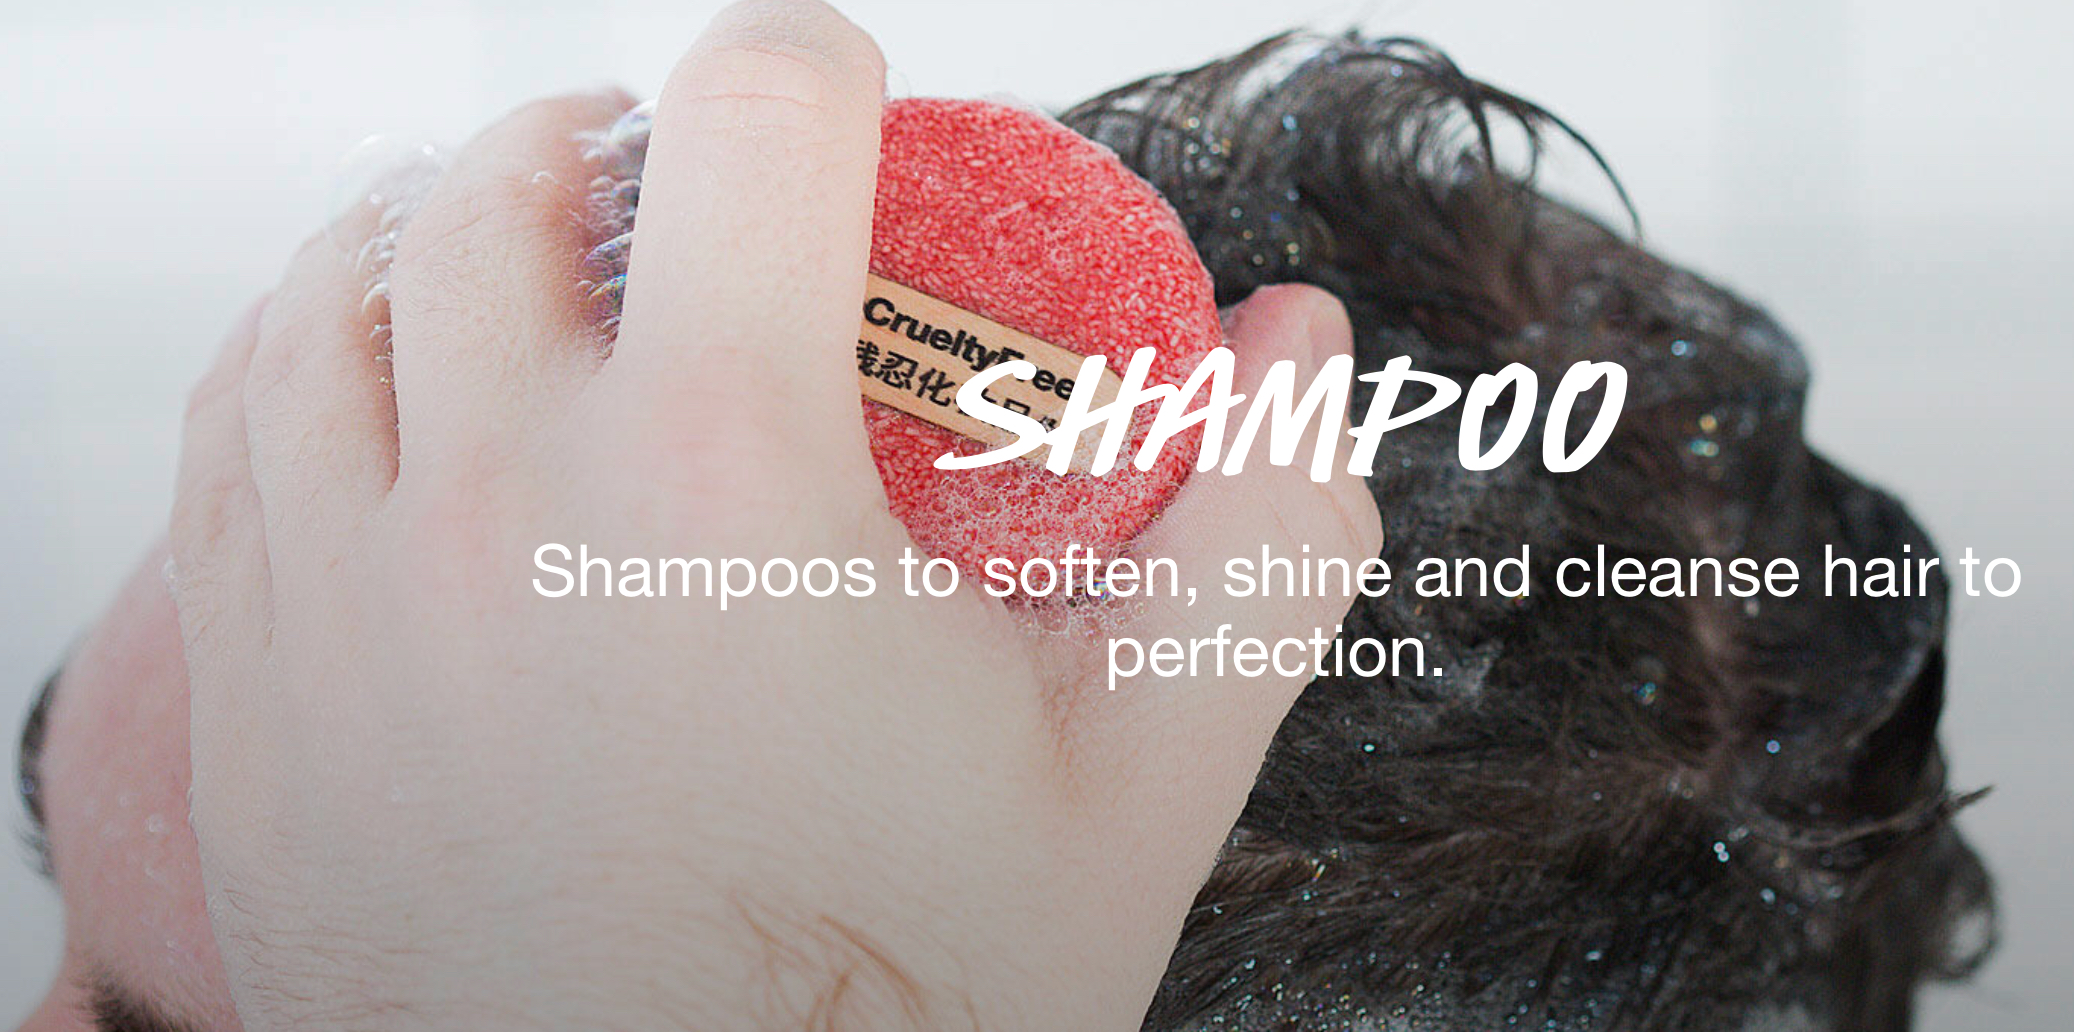 Use soap bars and shampoo bars instead. Companies like Lush offer a wide range of both.